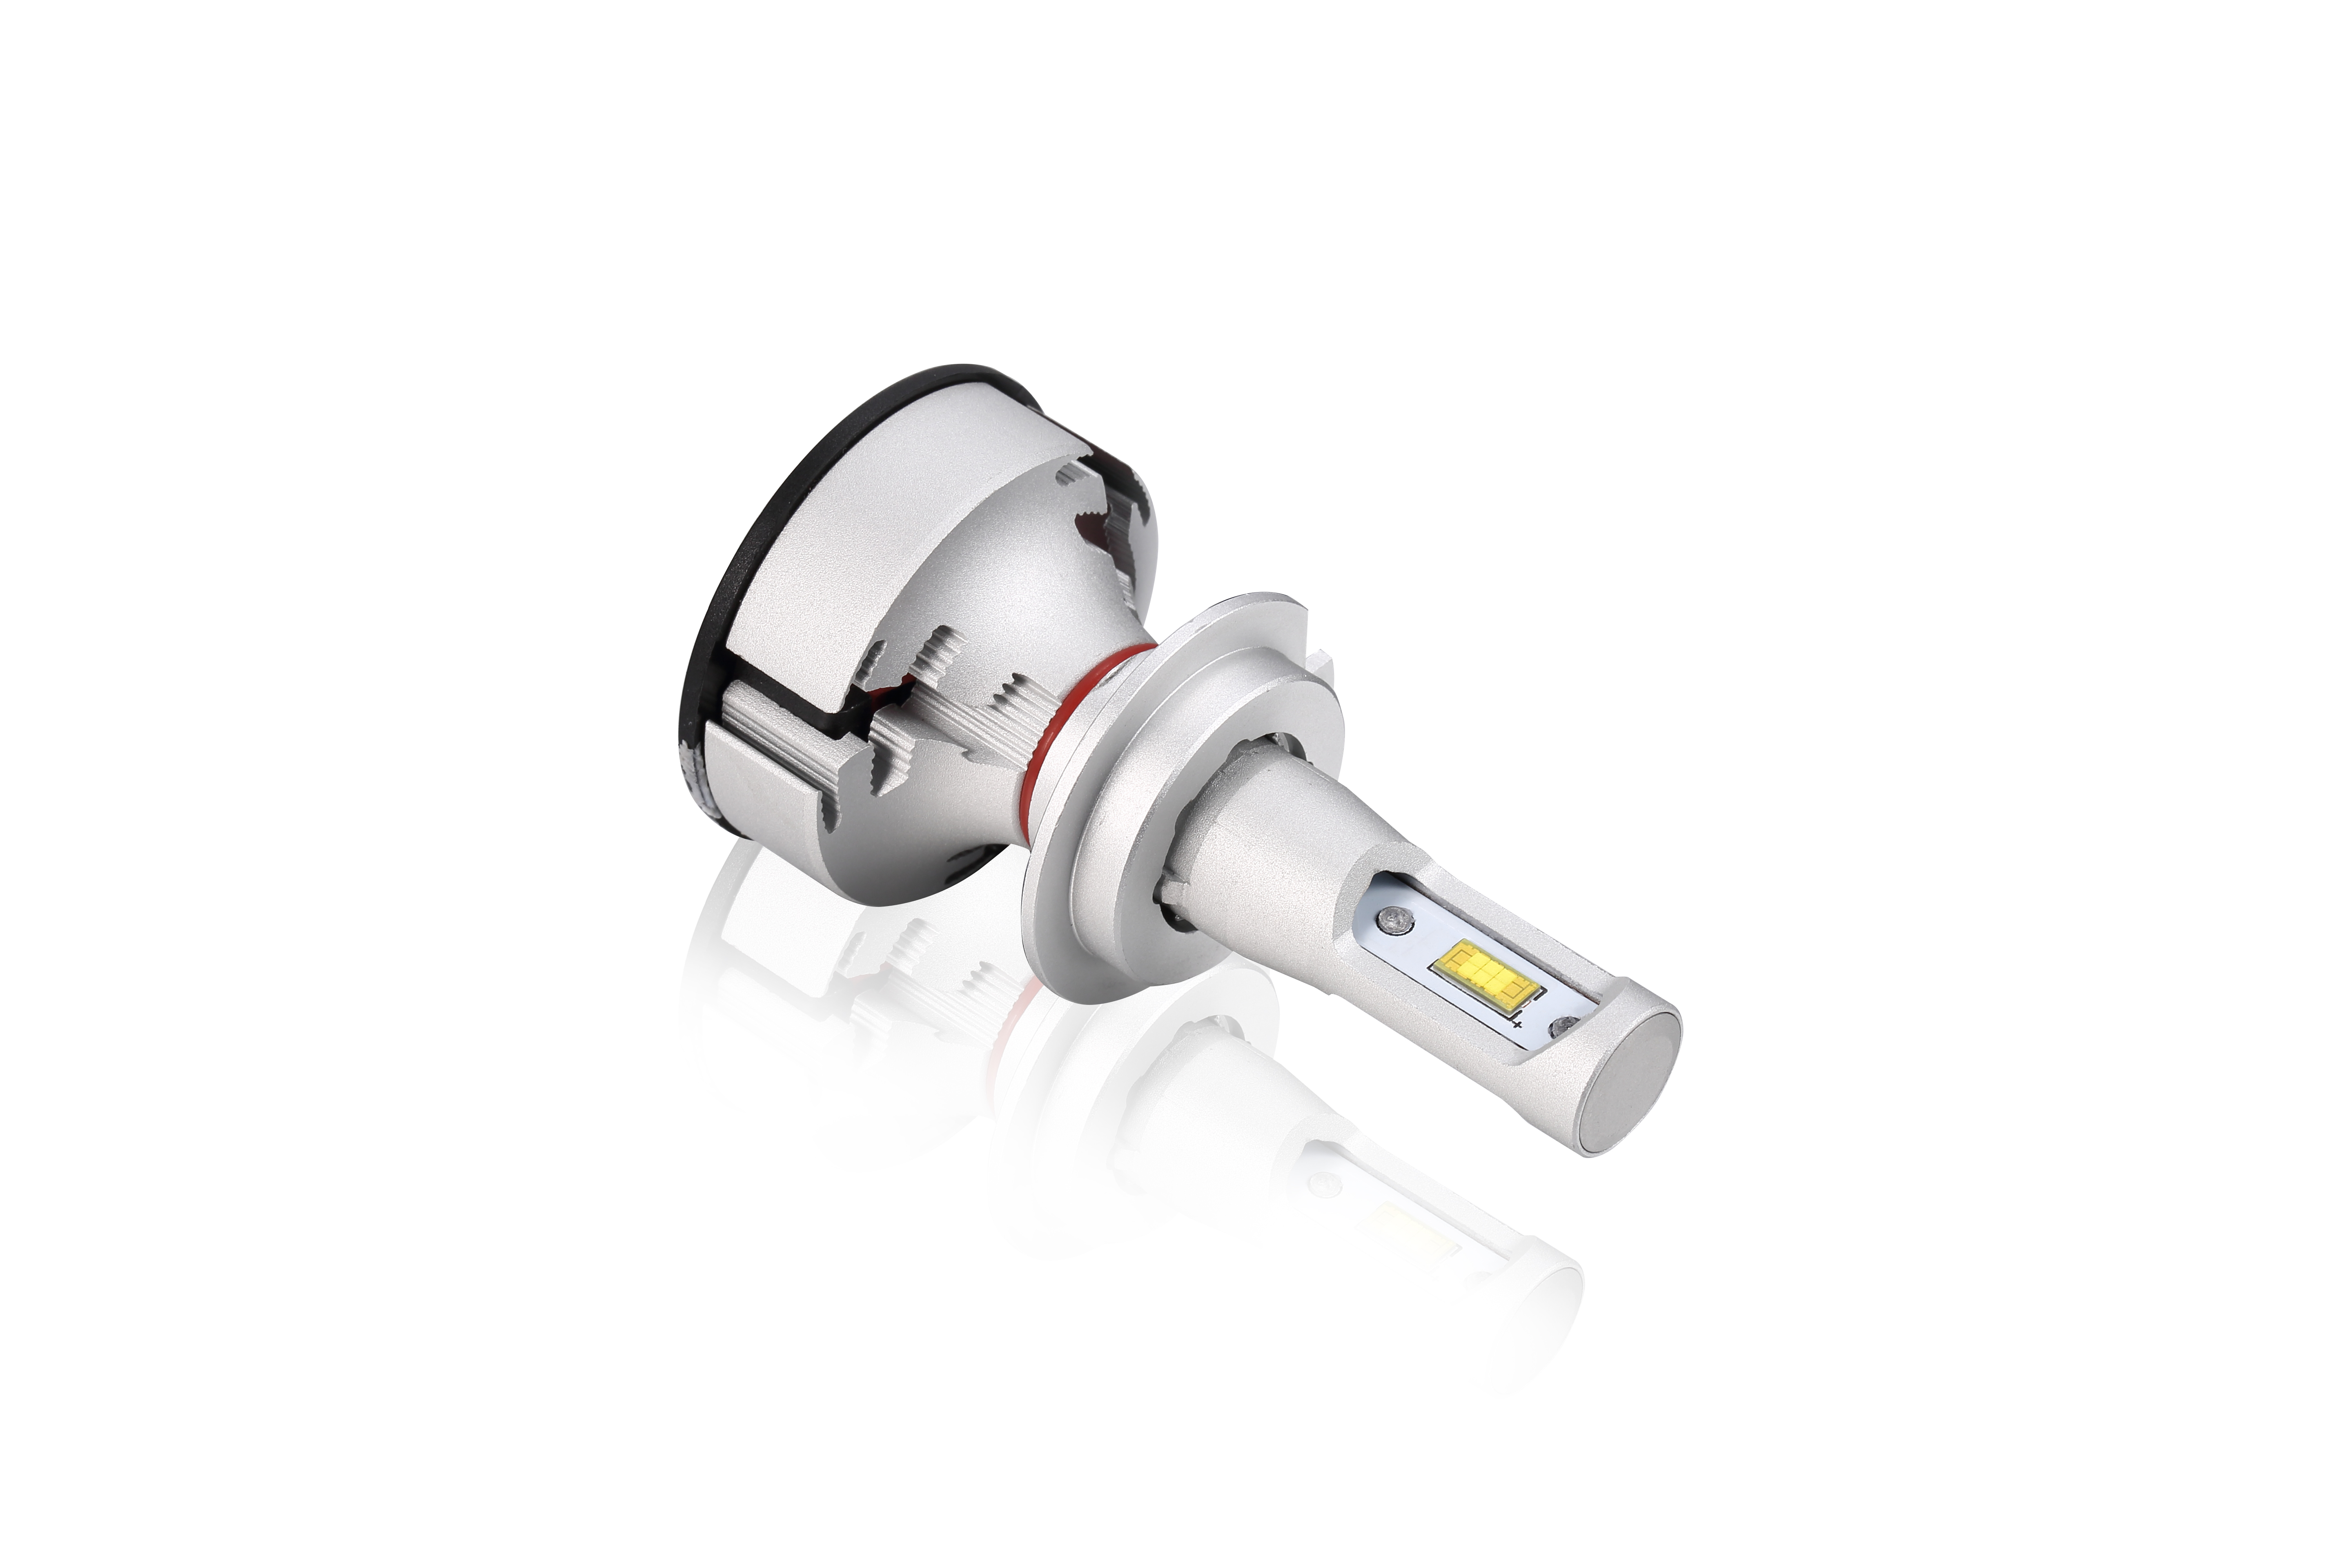 PriceList for 2017 F150 Led Headlights -
 4000LM high bright LED headlight bulb with smart fail-safe system – EKLIGHT